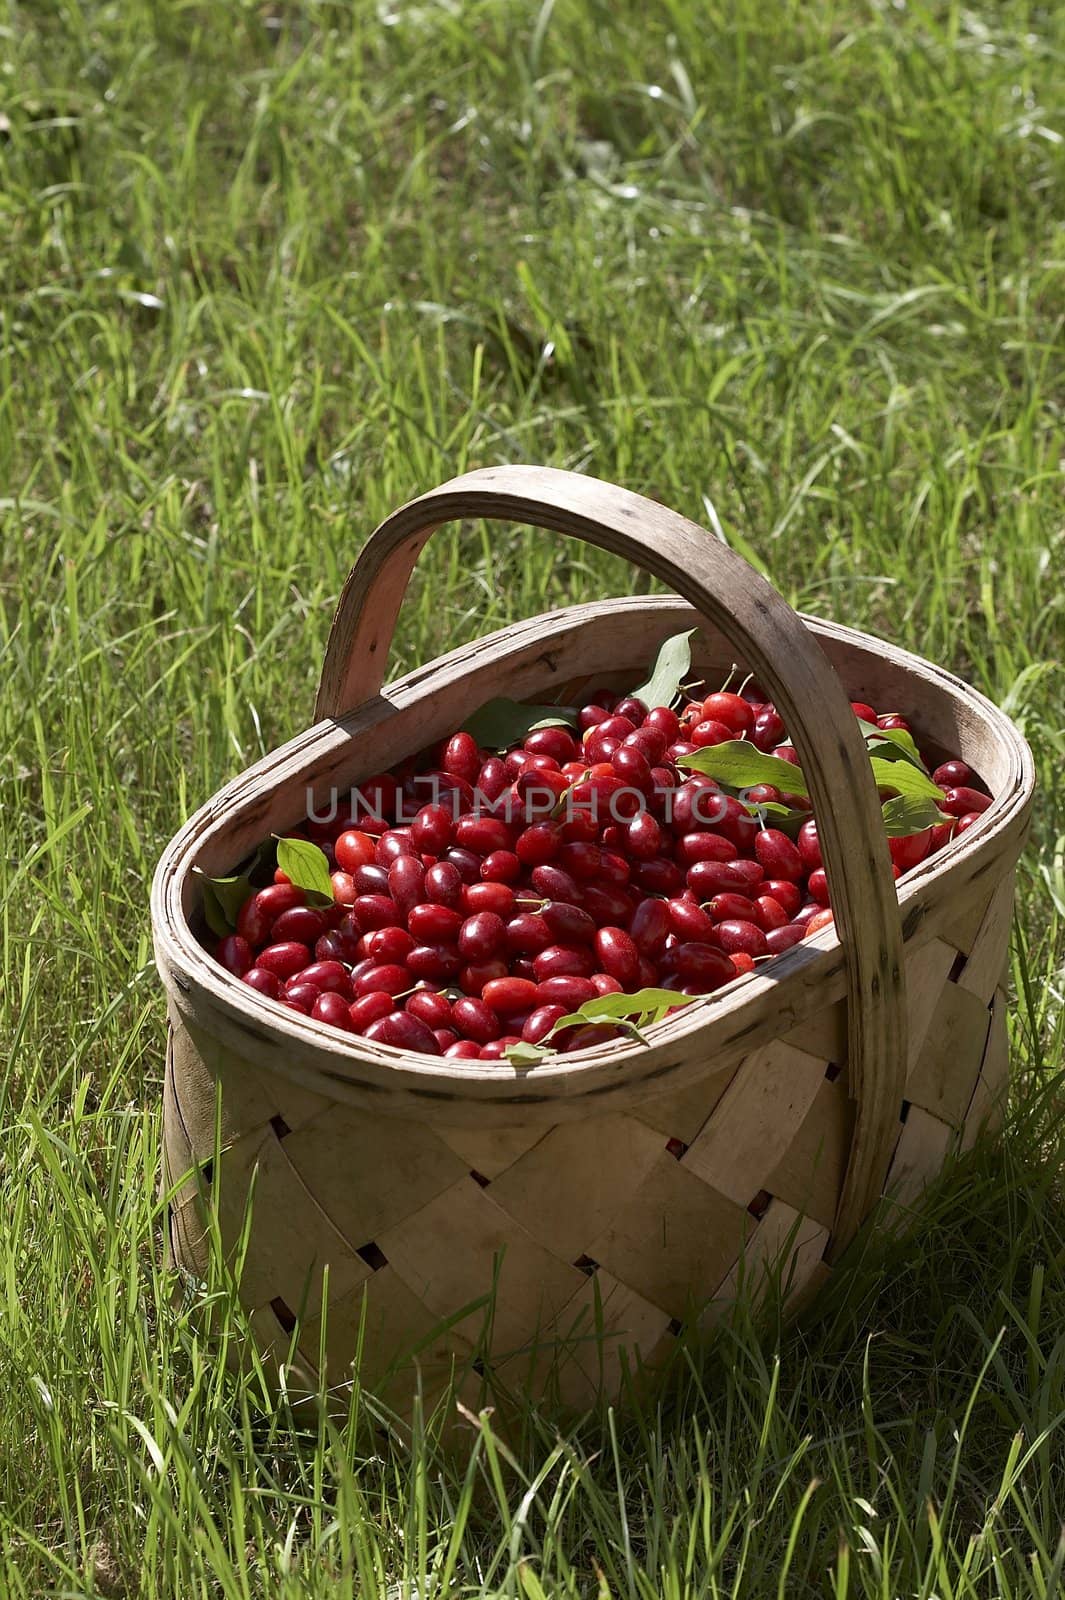 cornelian cherries